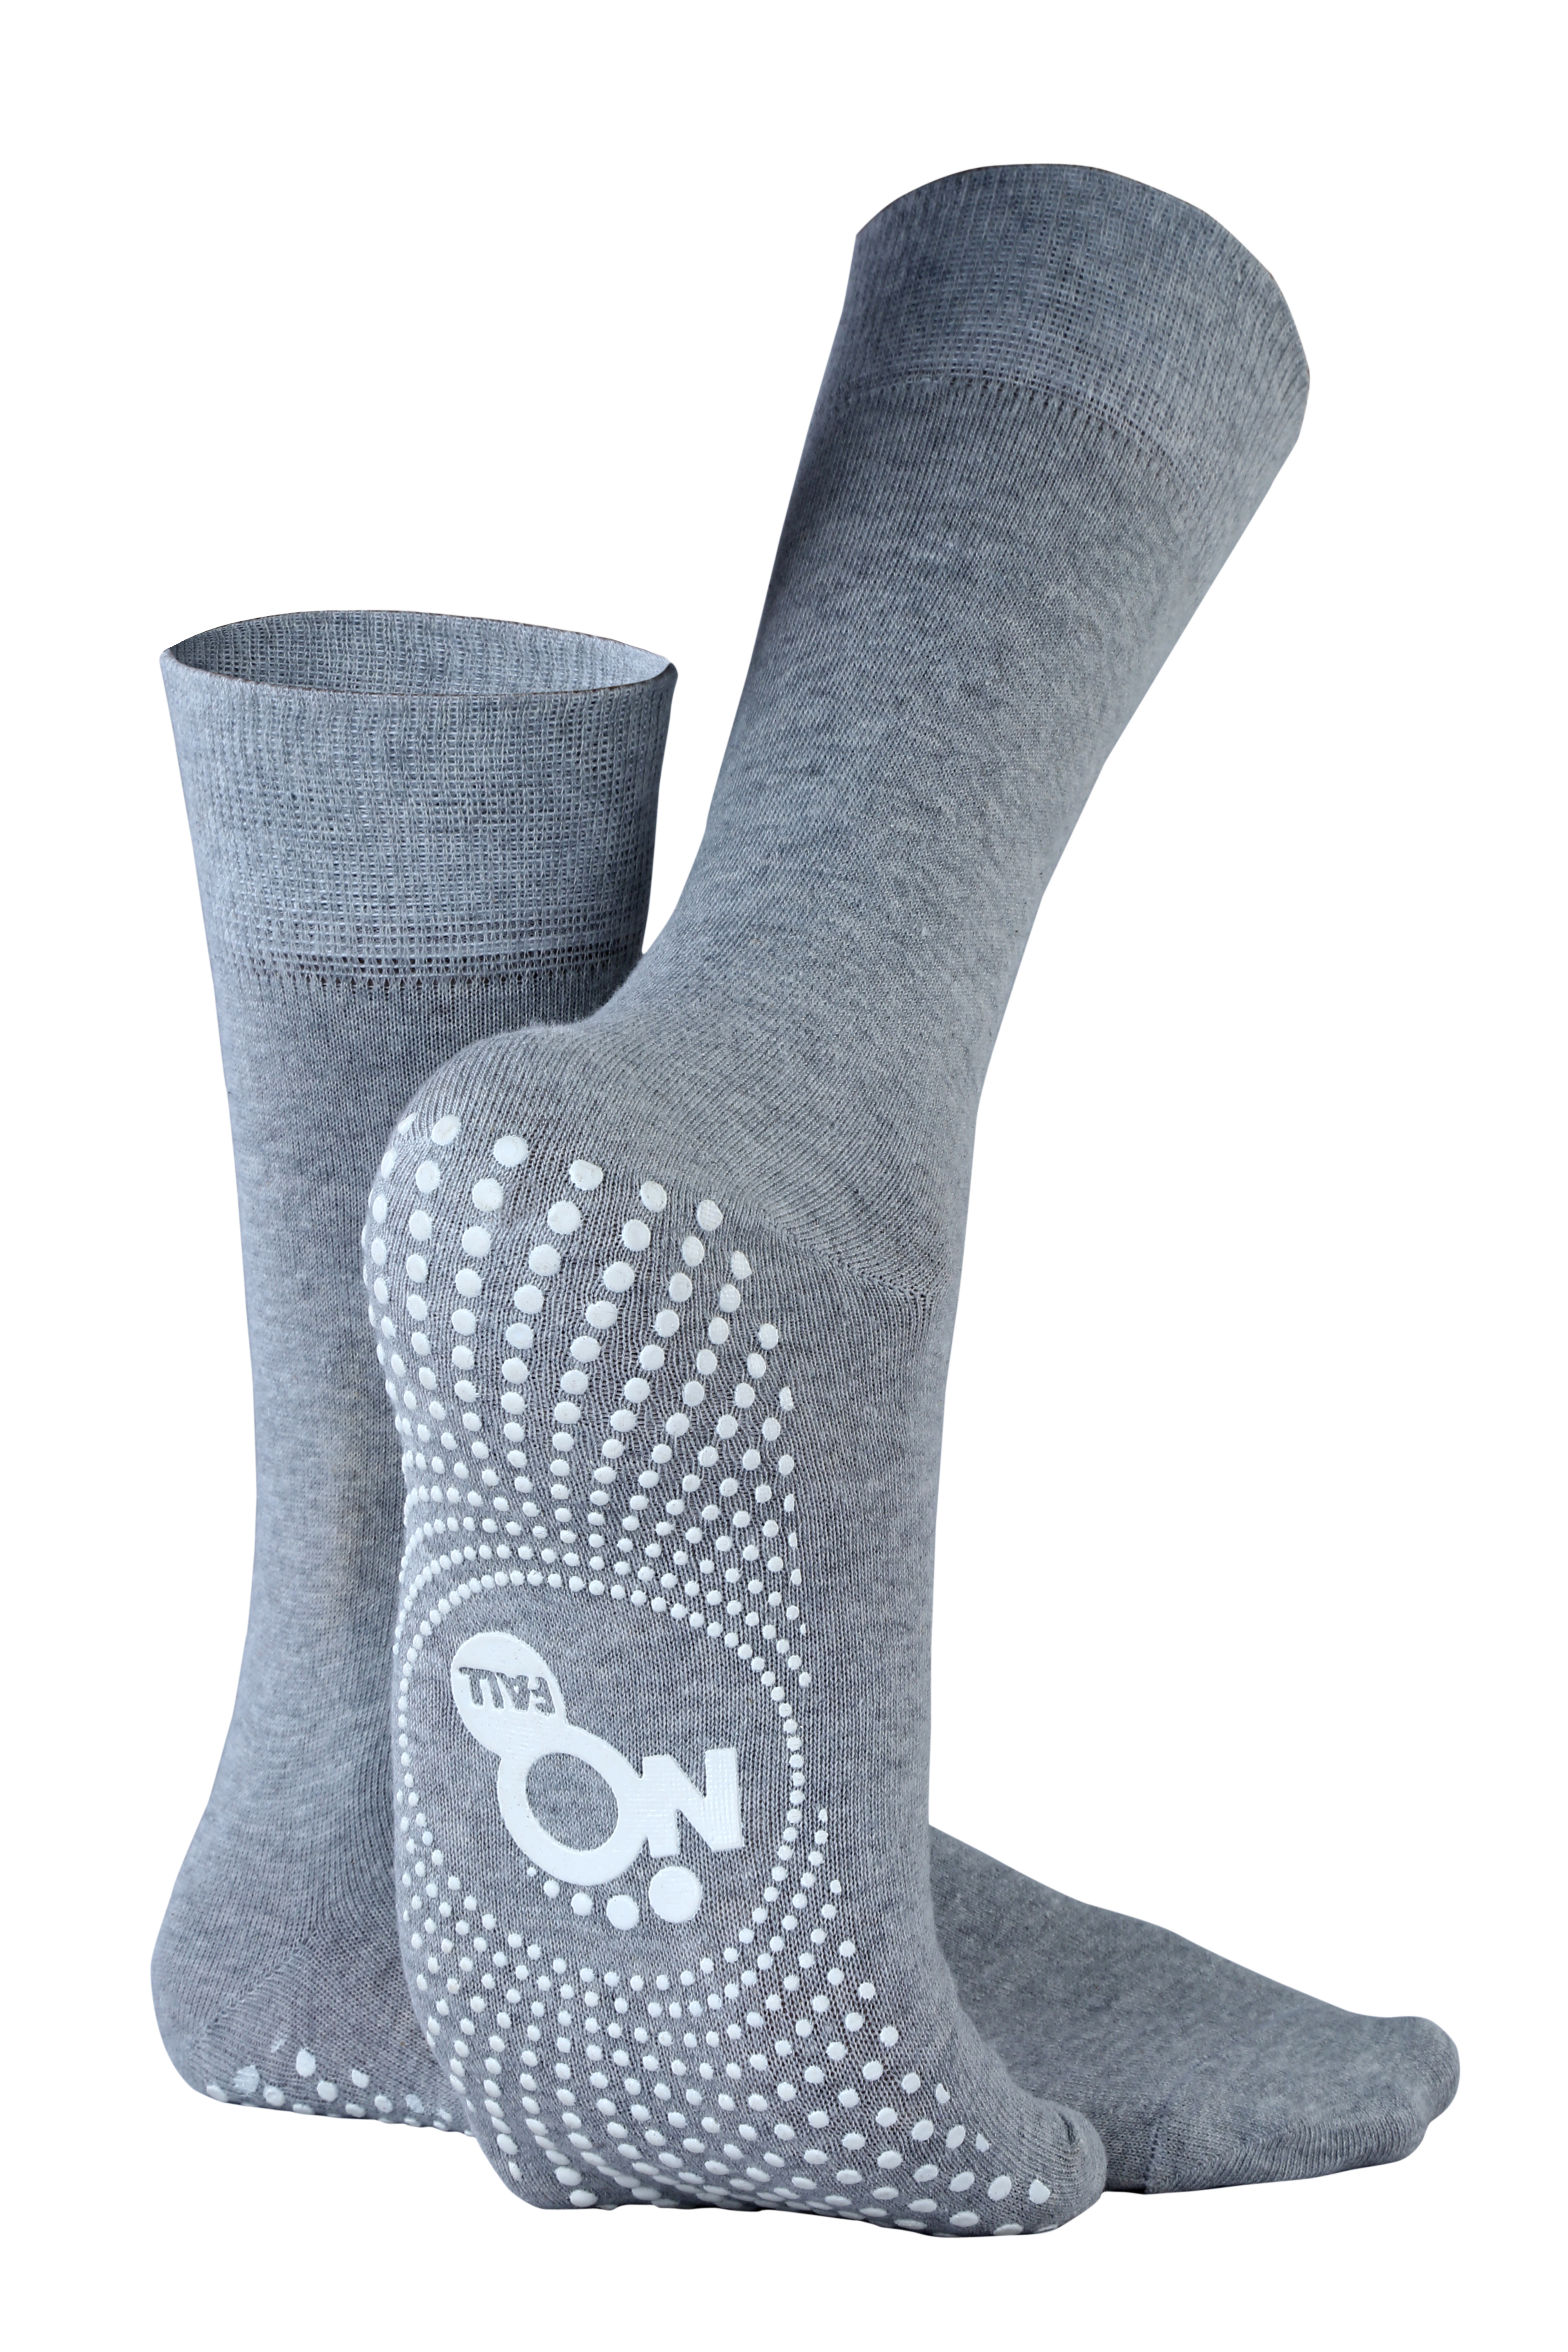 iArtker Non Slip Grip Socks Anti-Skid Hospital Socks India